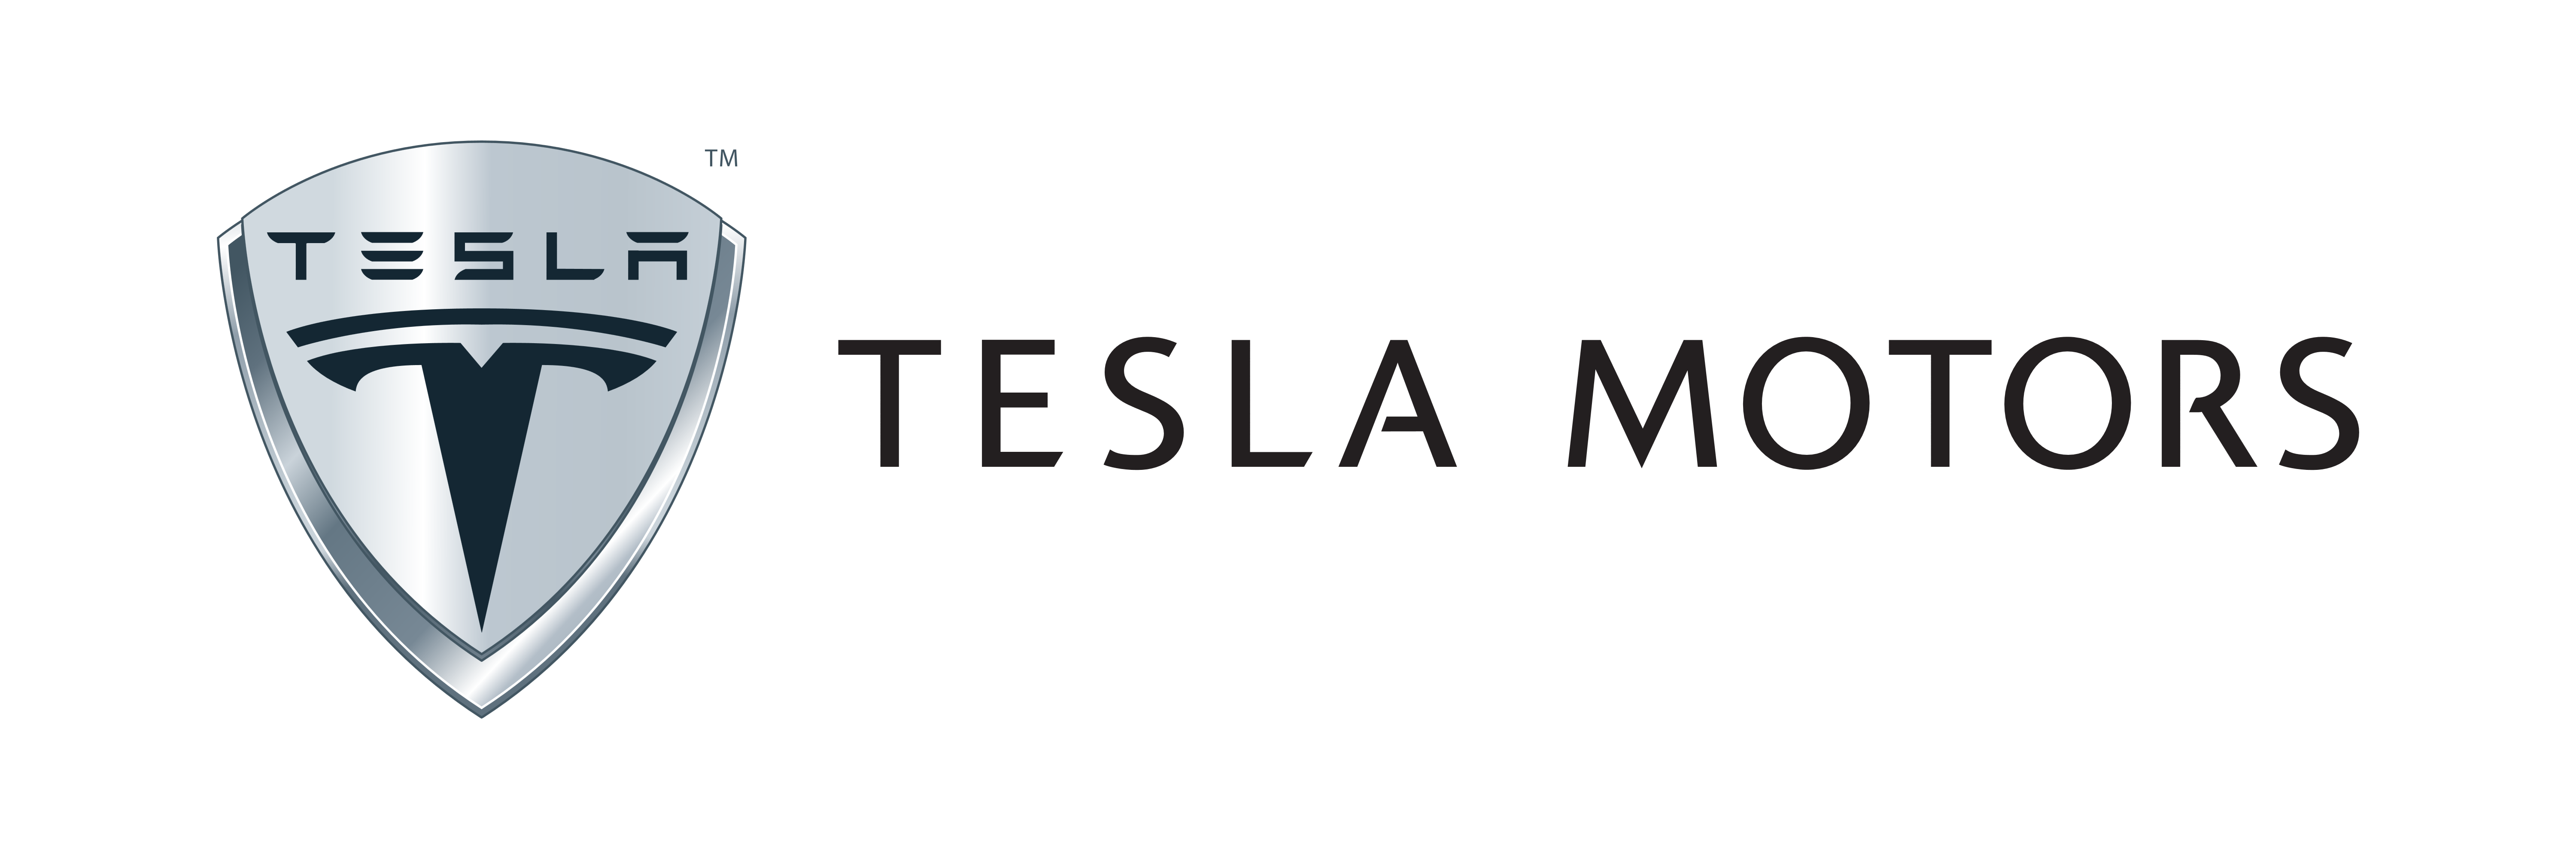 Tesla logo PNG images 